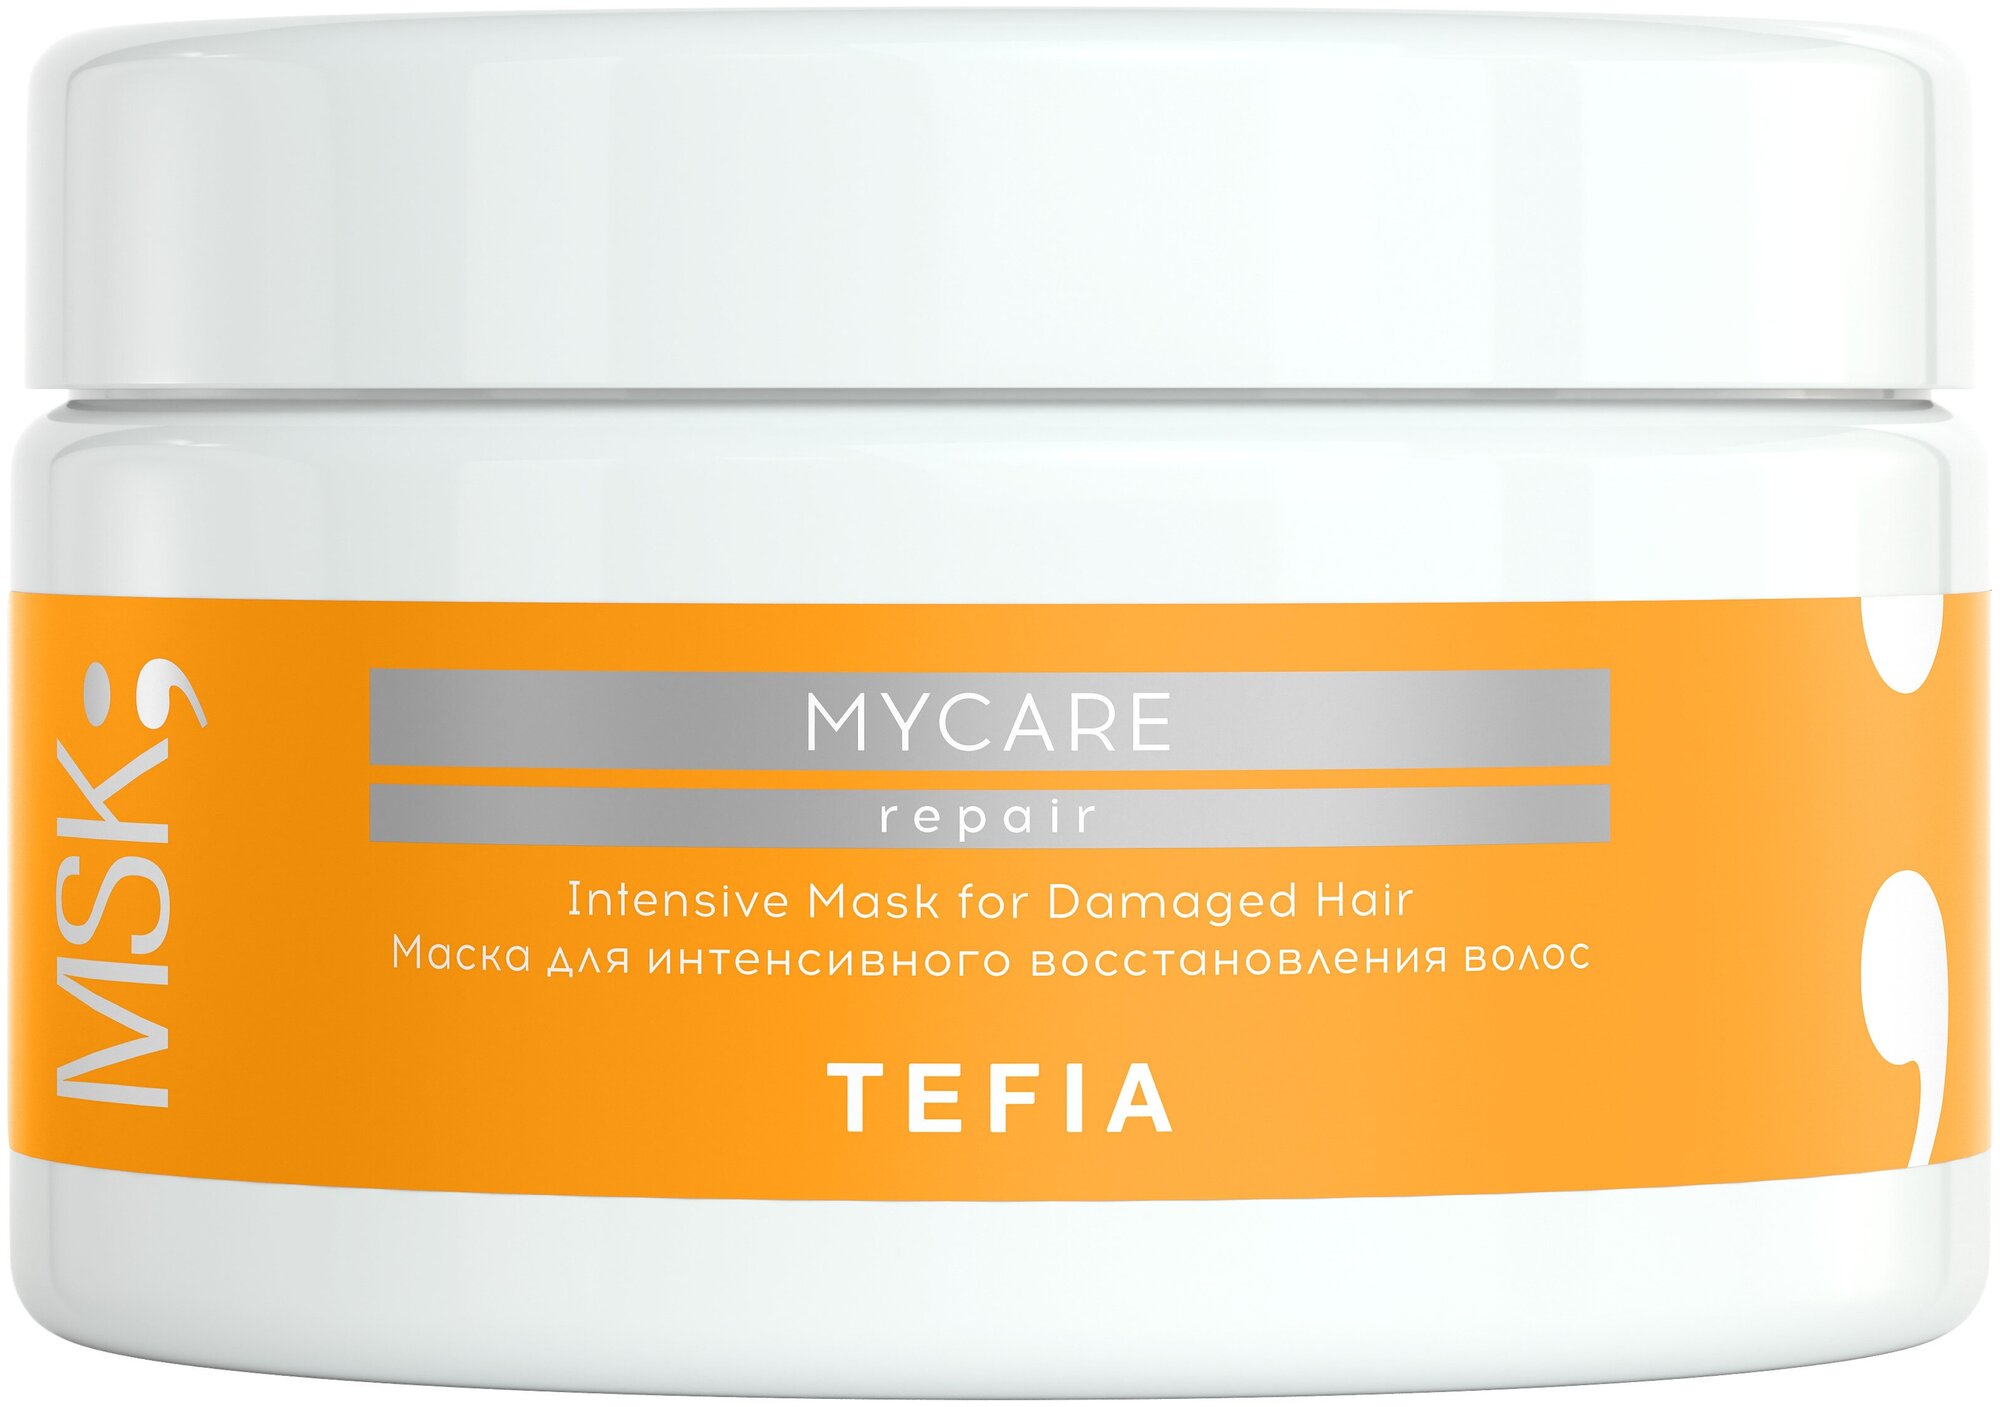 Tefia MyCare Repair Intensive Mask for Damaged Hair Маска для интенсивного восстановления волос